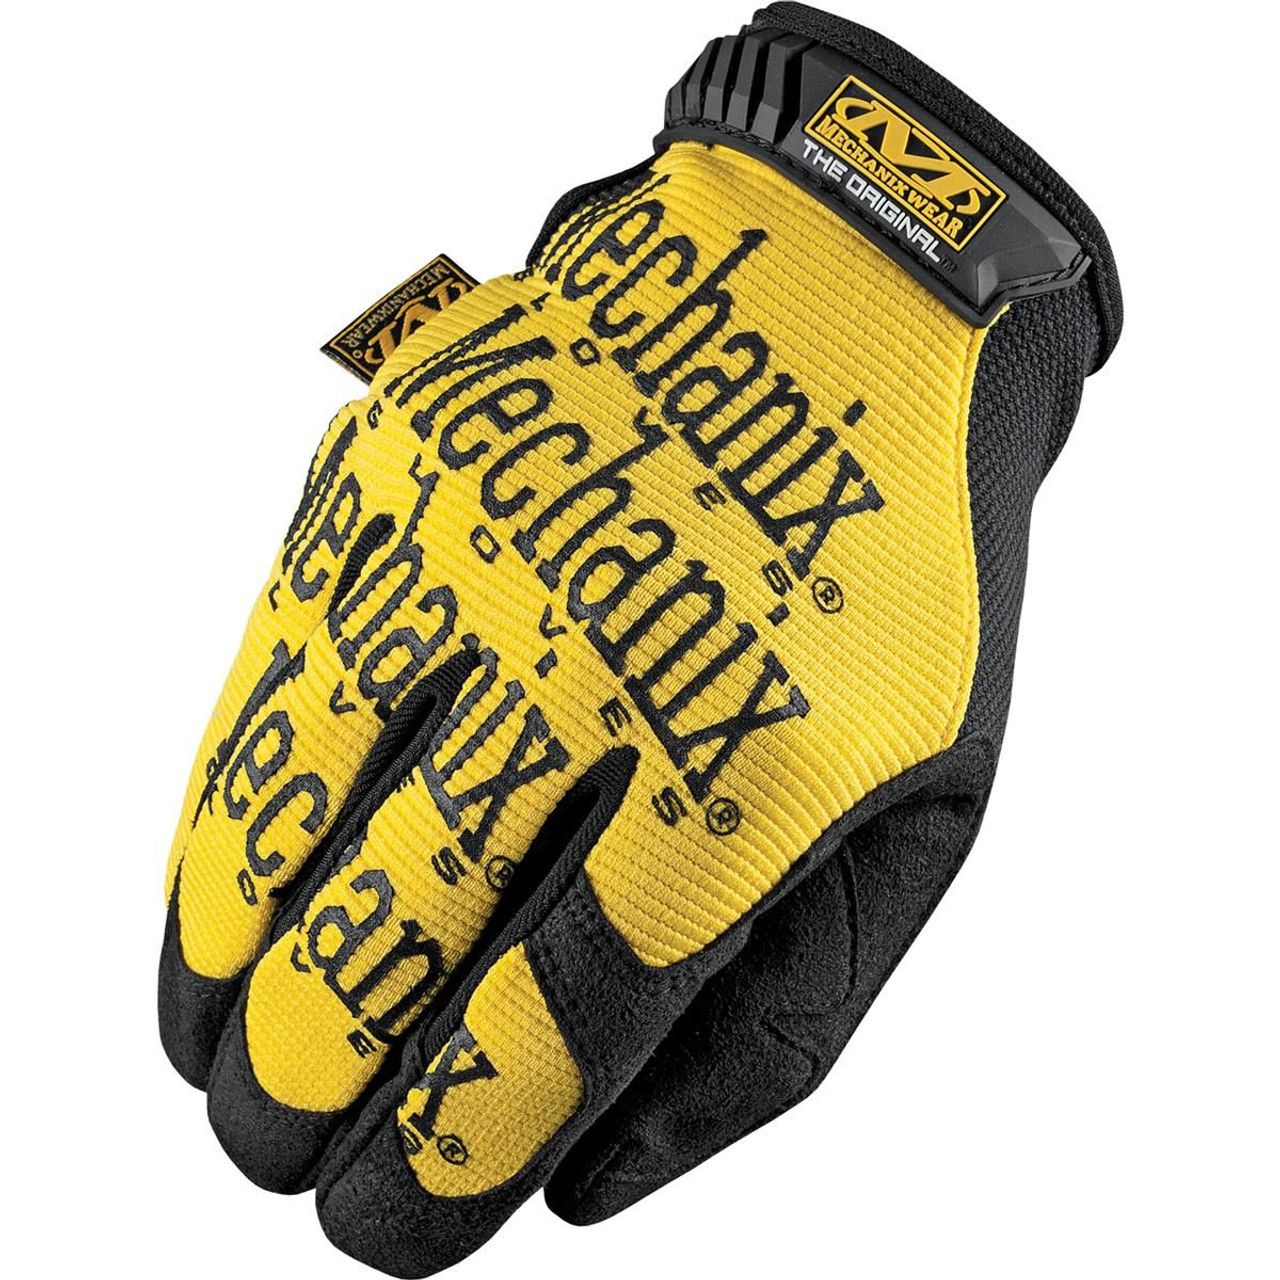 Mechanix Wear The Original Glove - Yellow